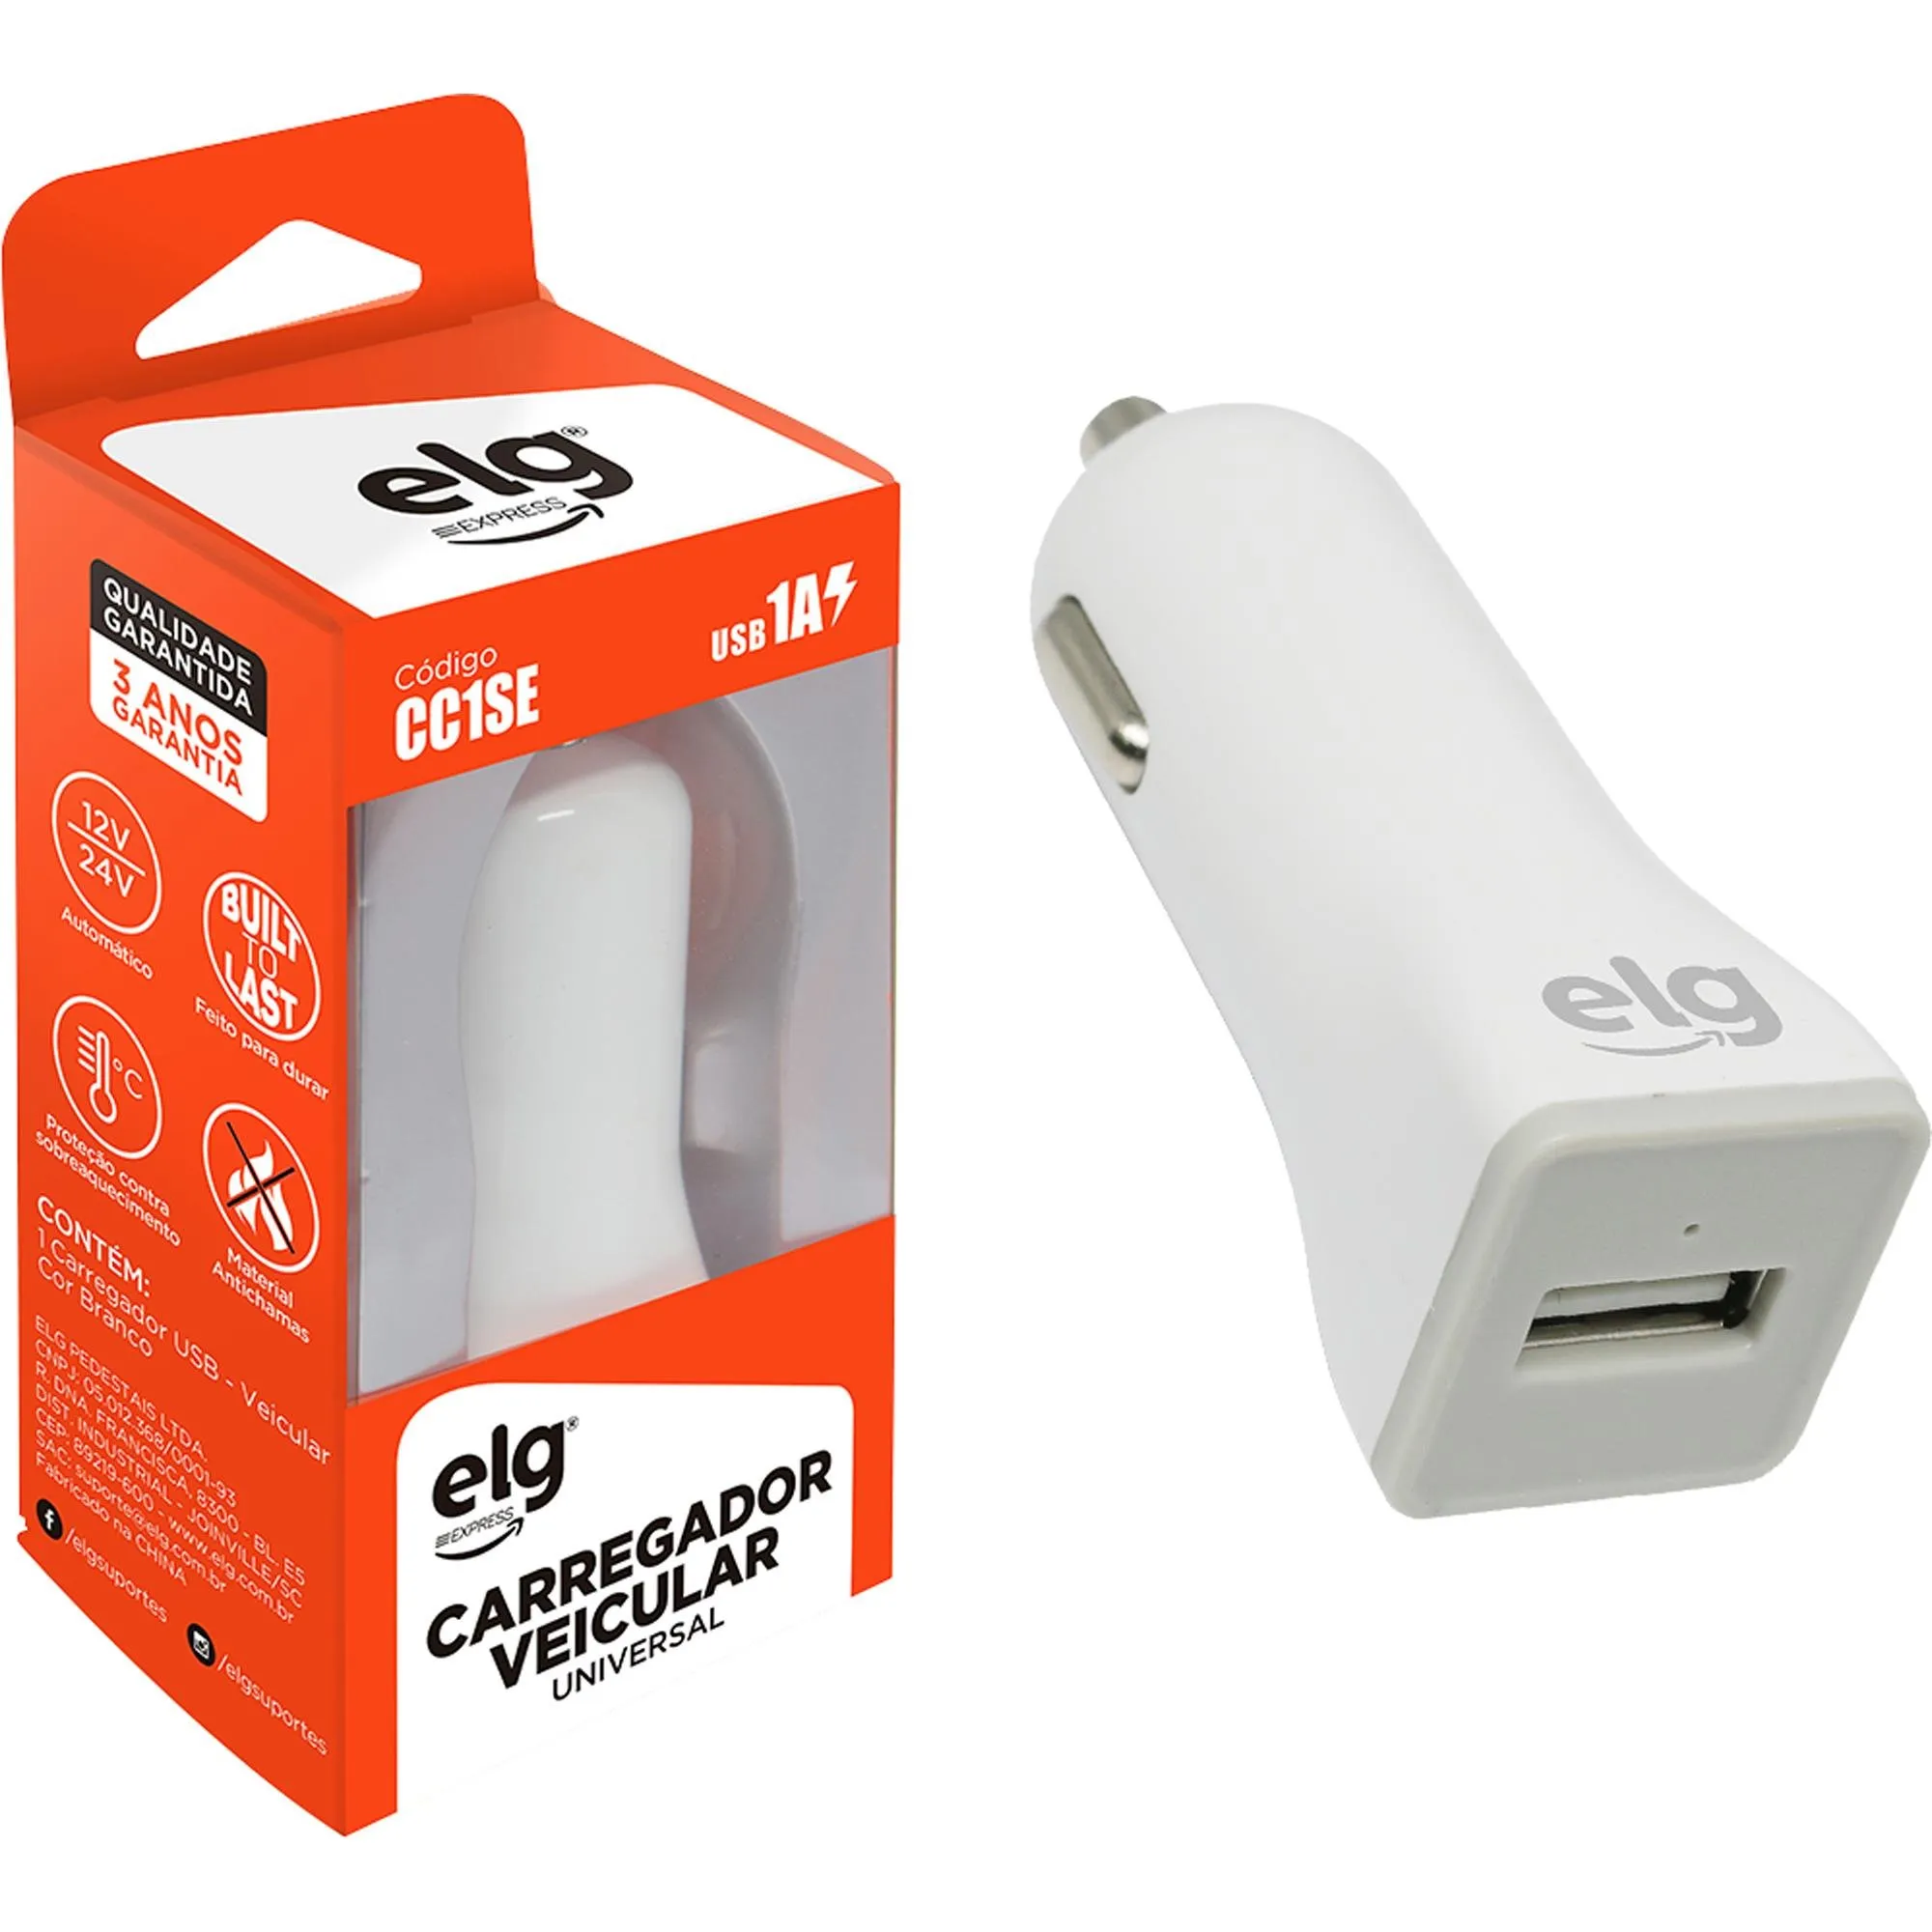 Carregador Veicular Universal USB 1A CC1SE Branco ELG (81451)